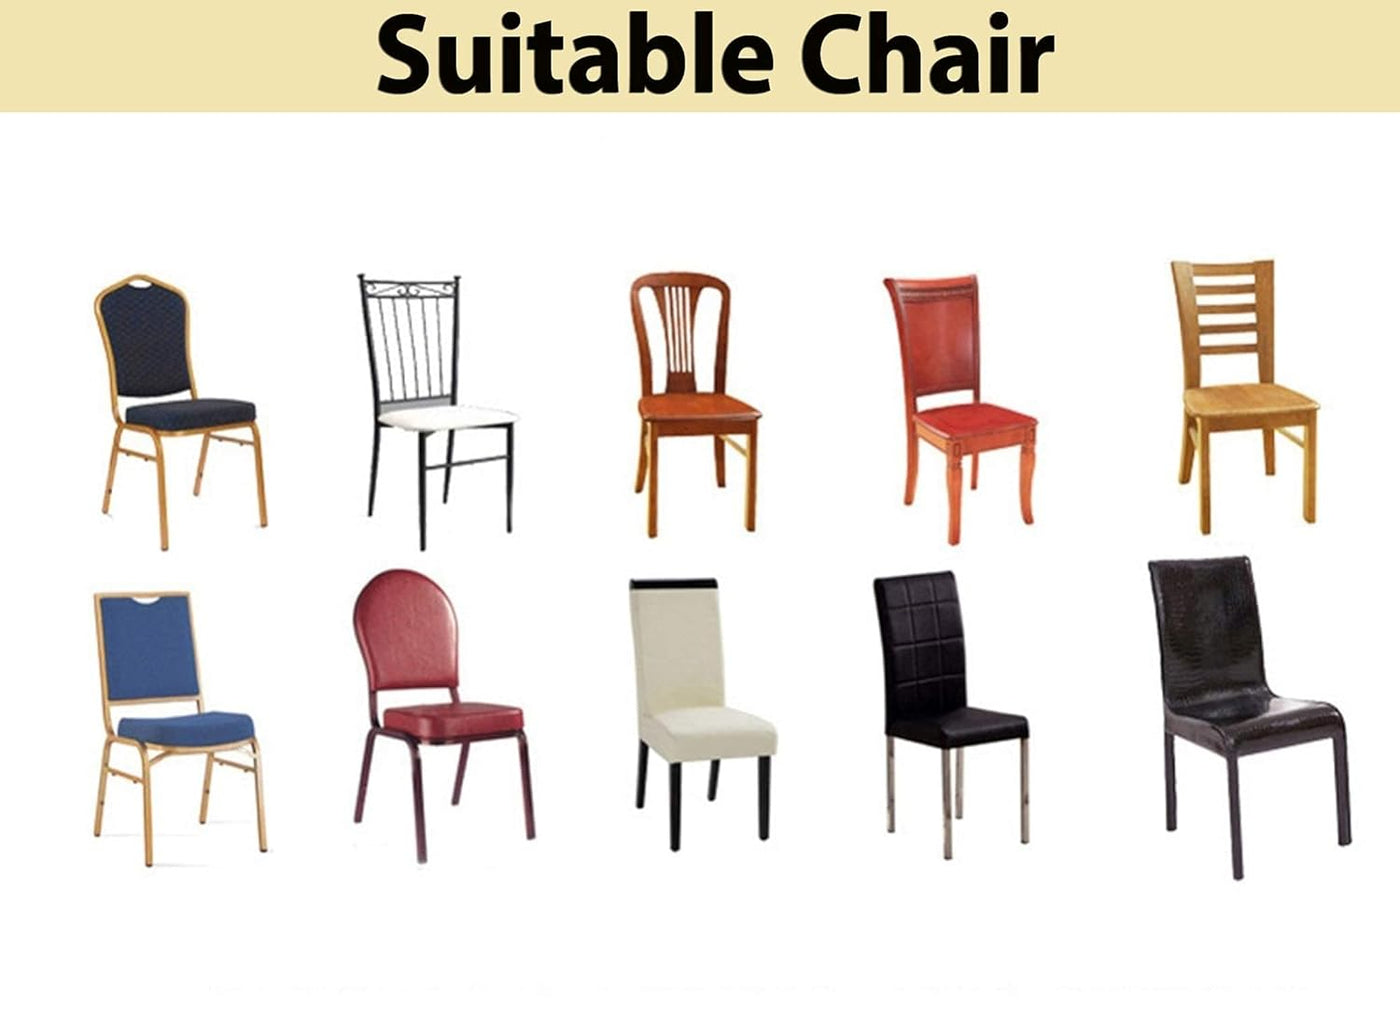 Elastic Chair Cover (Zigzag Bohemian)